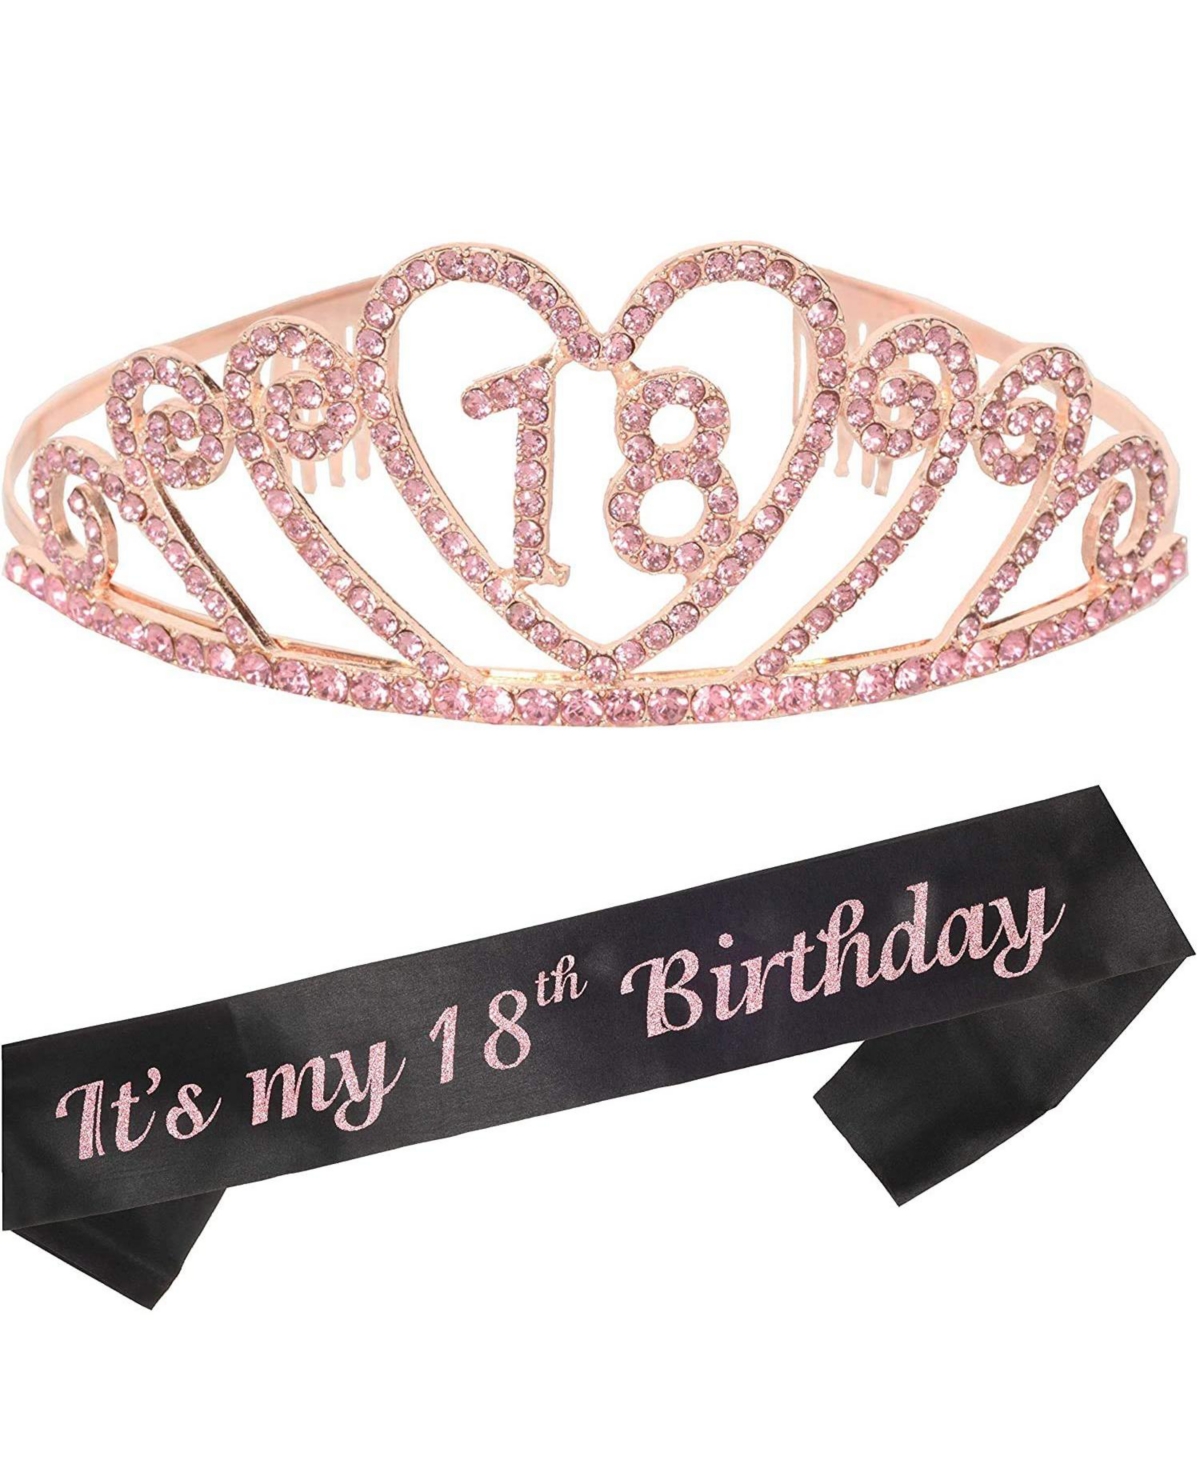 18th Birthday Sash and Tiara for Women - Fabulous Set: Glitter Sash + Basic Rhinestone Premium Metal Tiara, 18th Birthday Gifts for Women P